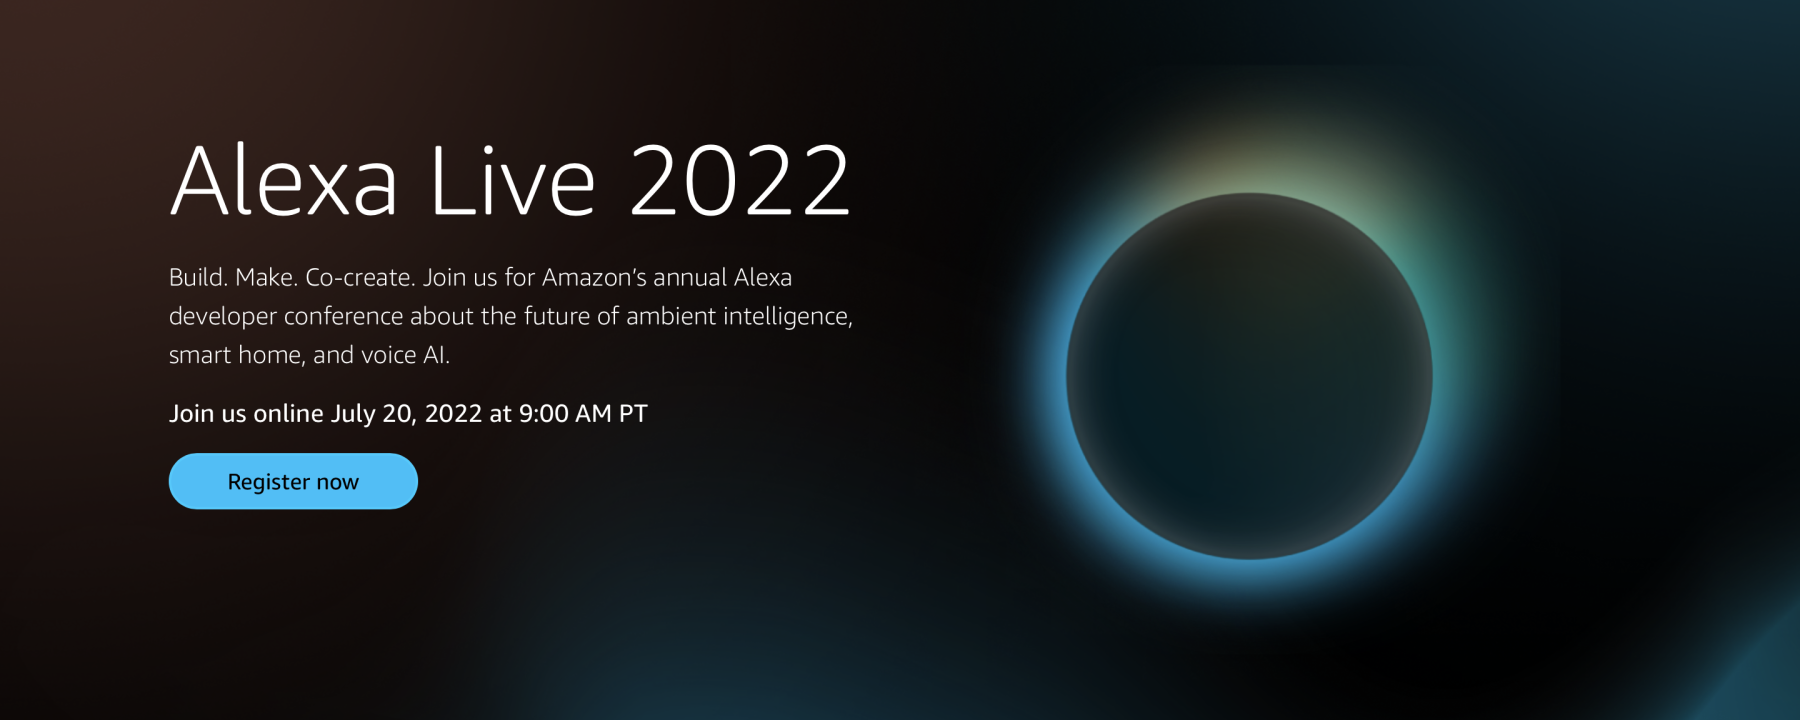 Alexa Live 2022